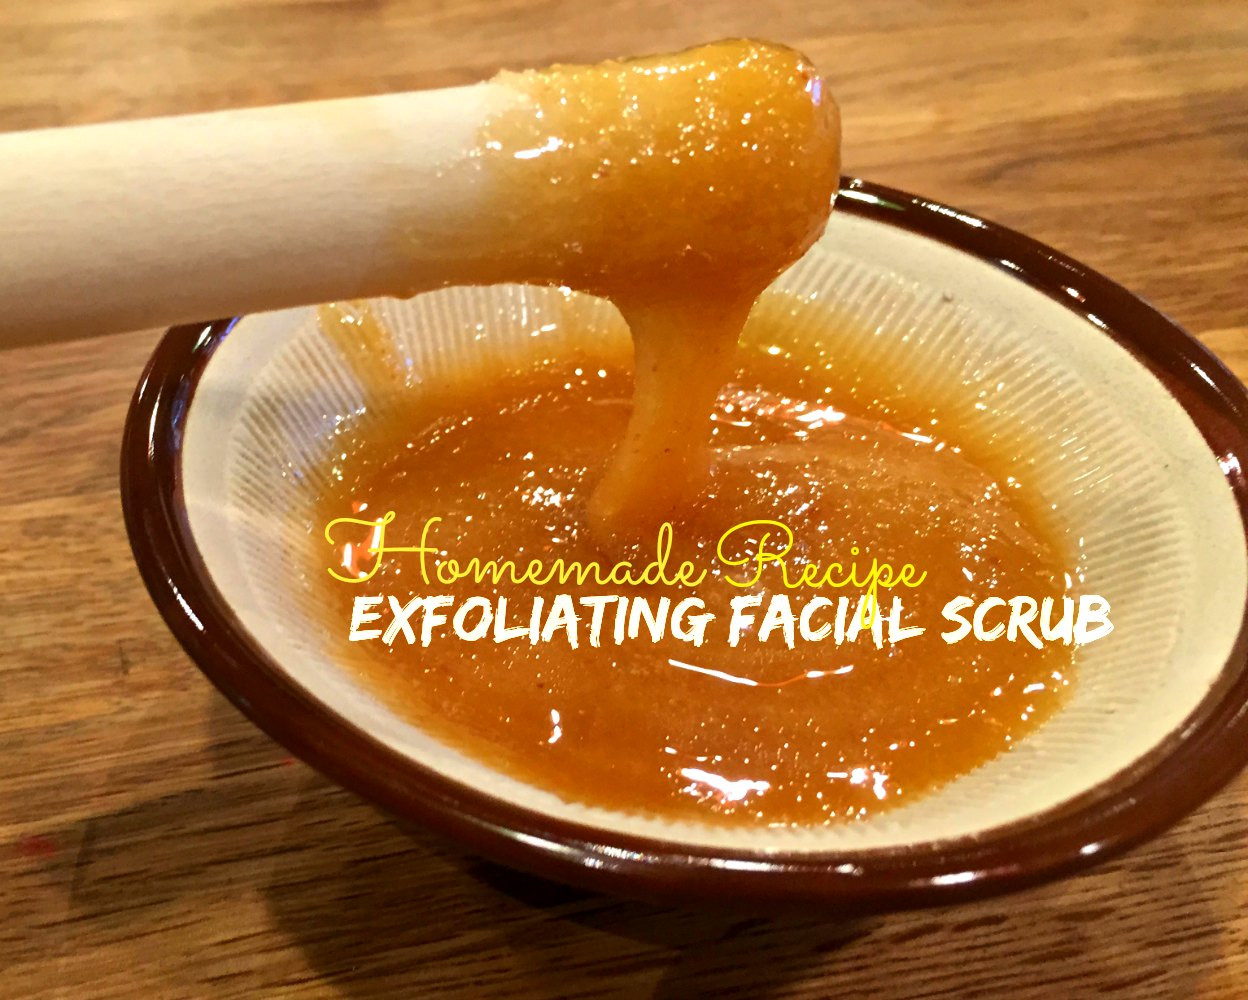 Best ideas about DIY Exfoliating Scrub
. Save or Pin Natural Exfoliating Facial Scrub Recipe Now.